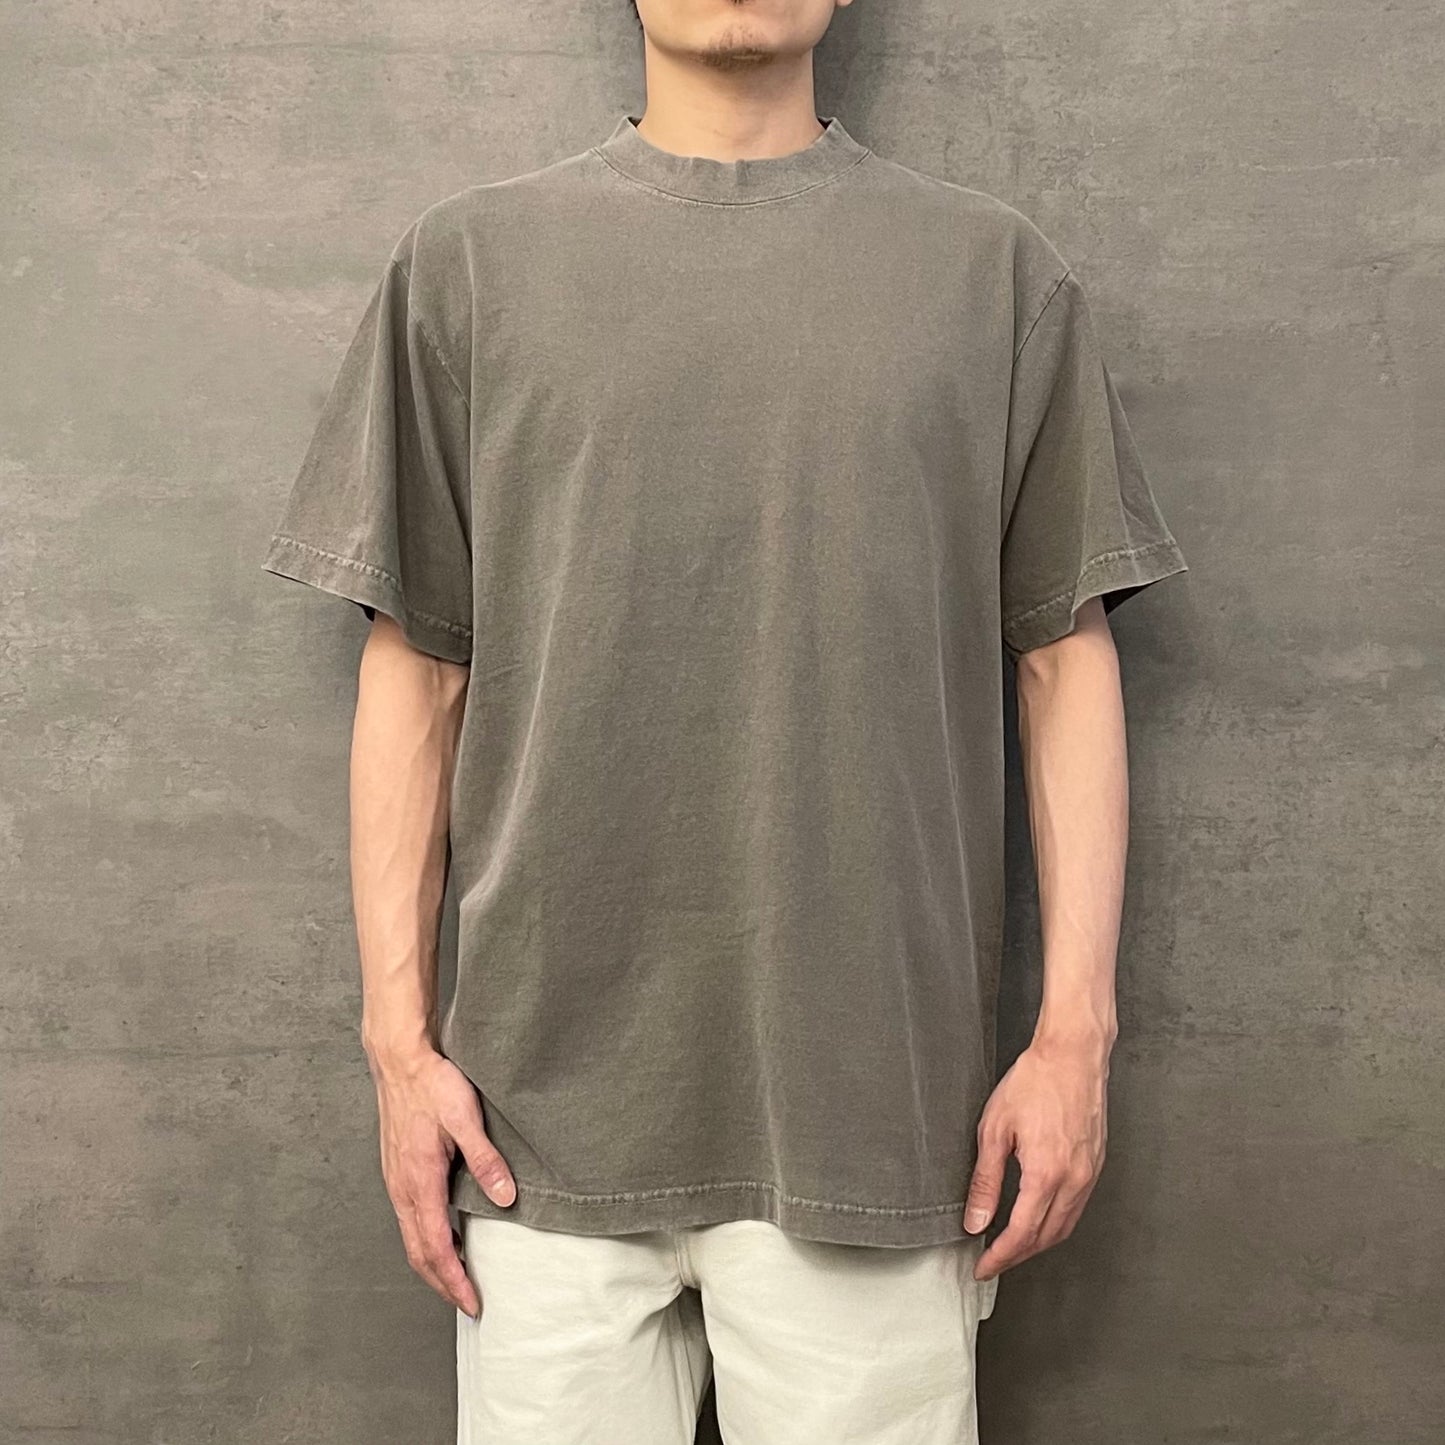 Shaka Wear 7.5oz. Max Heavyweight Garment Dye T-Shirt - Cement